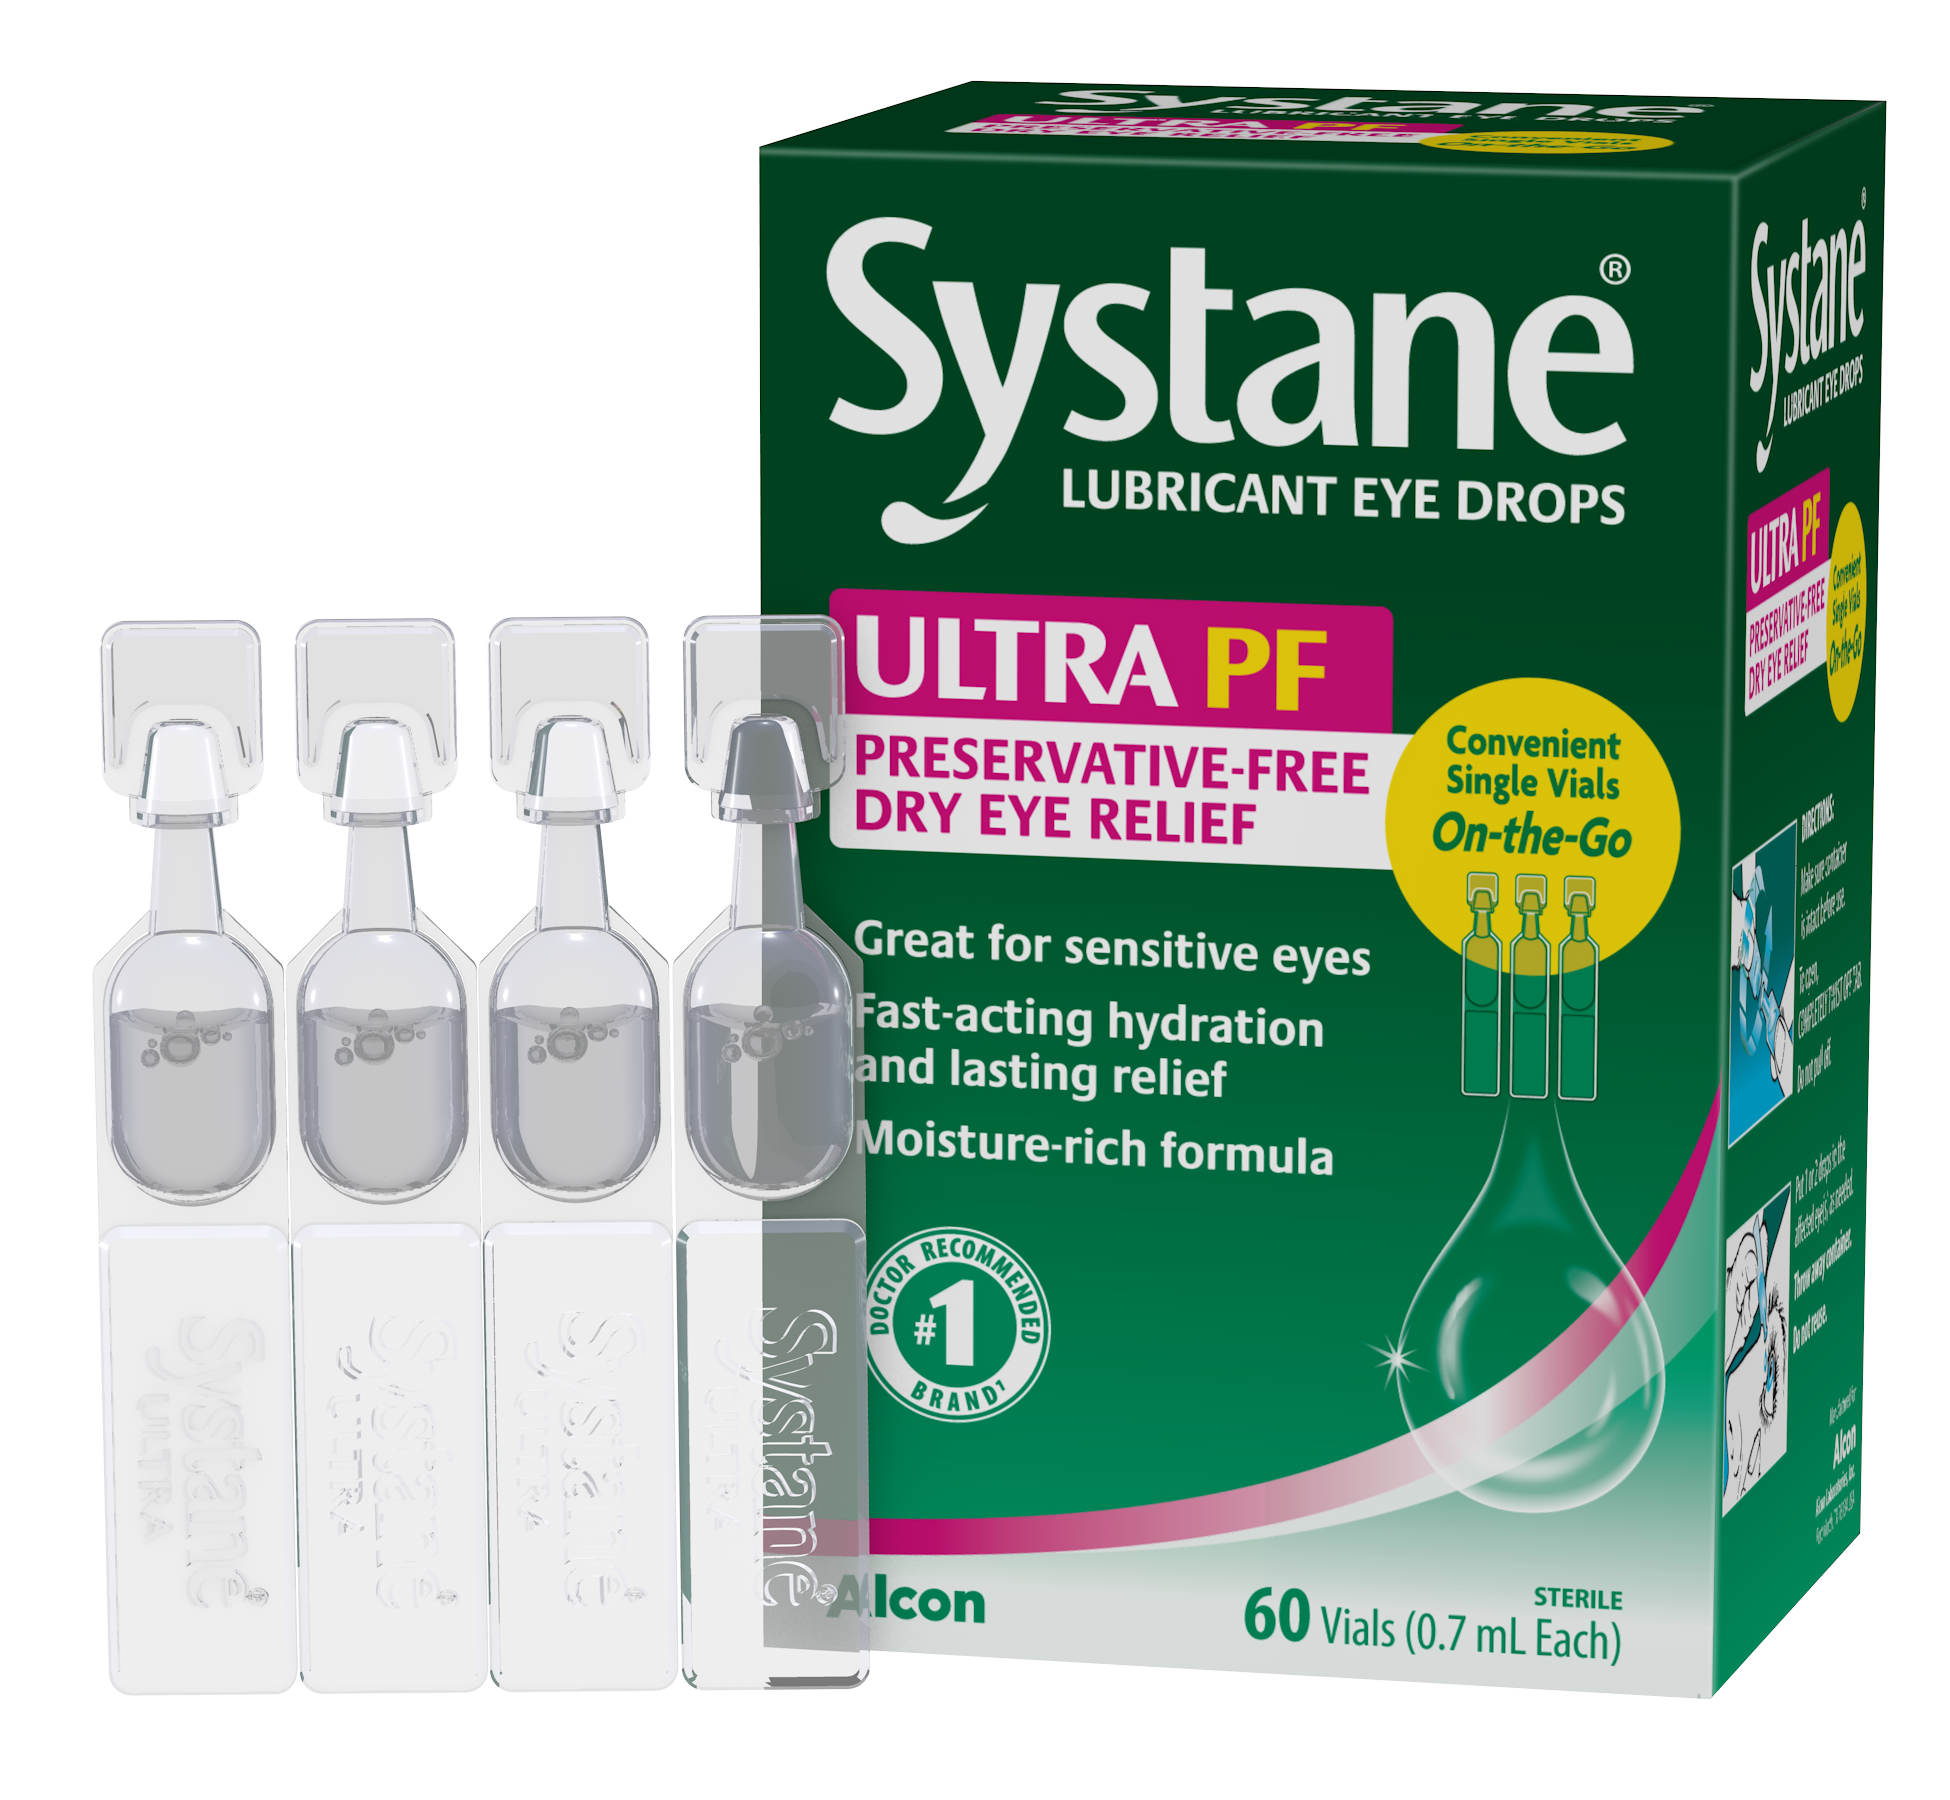 SYSTANE® ULTRA Preservative-Free Eye Drops